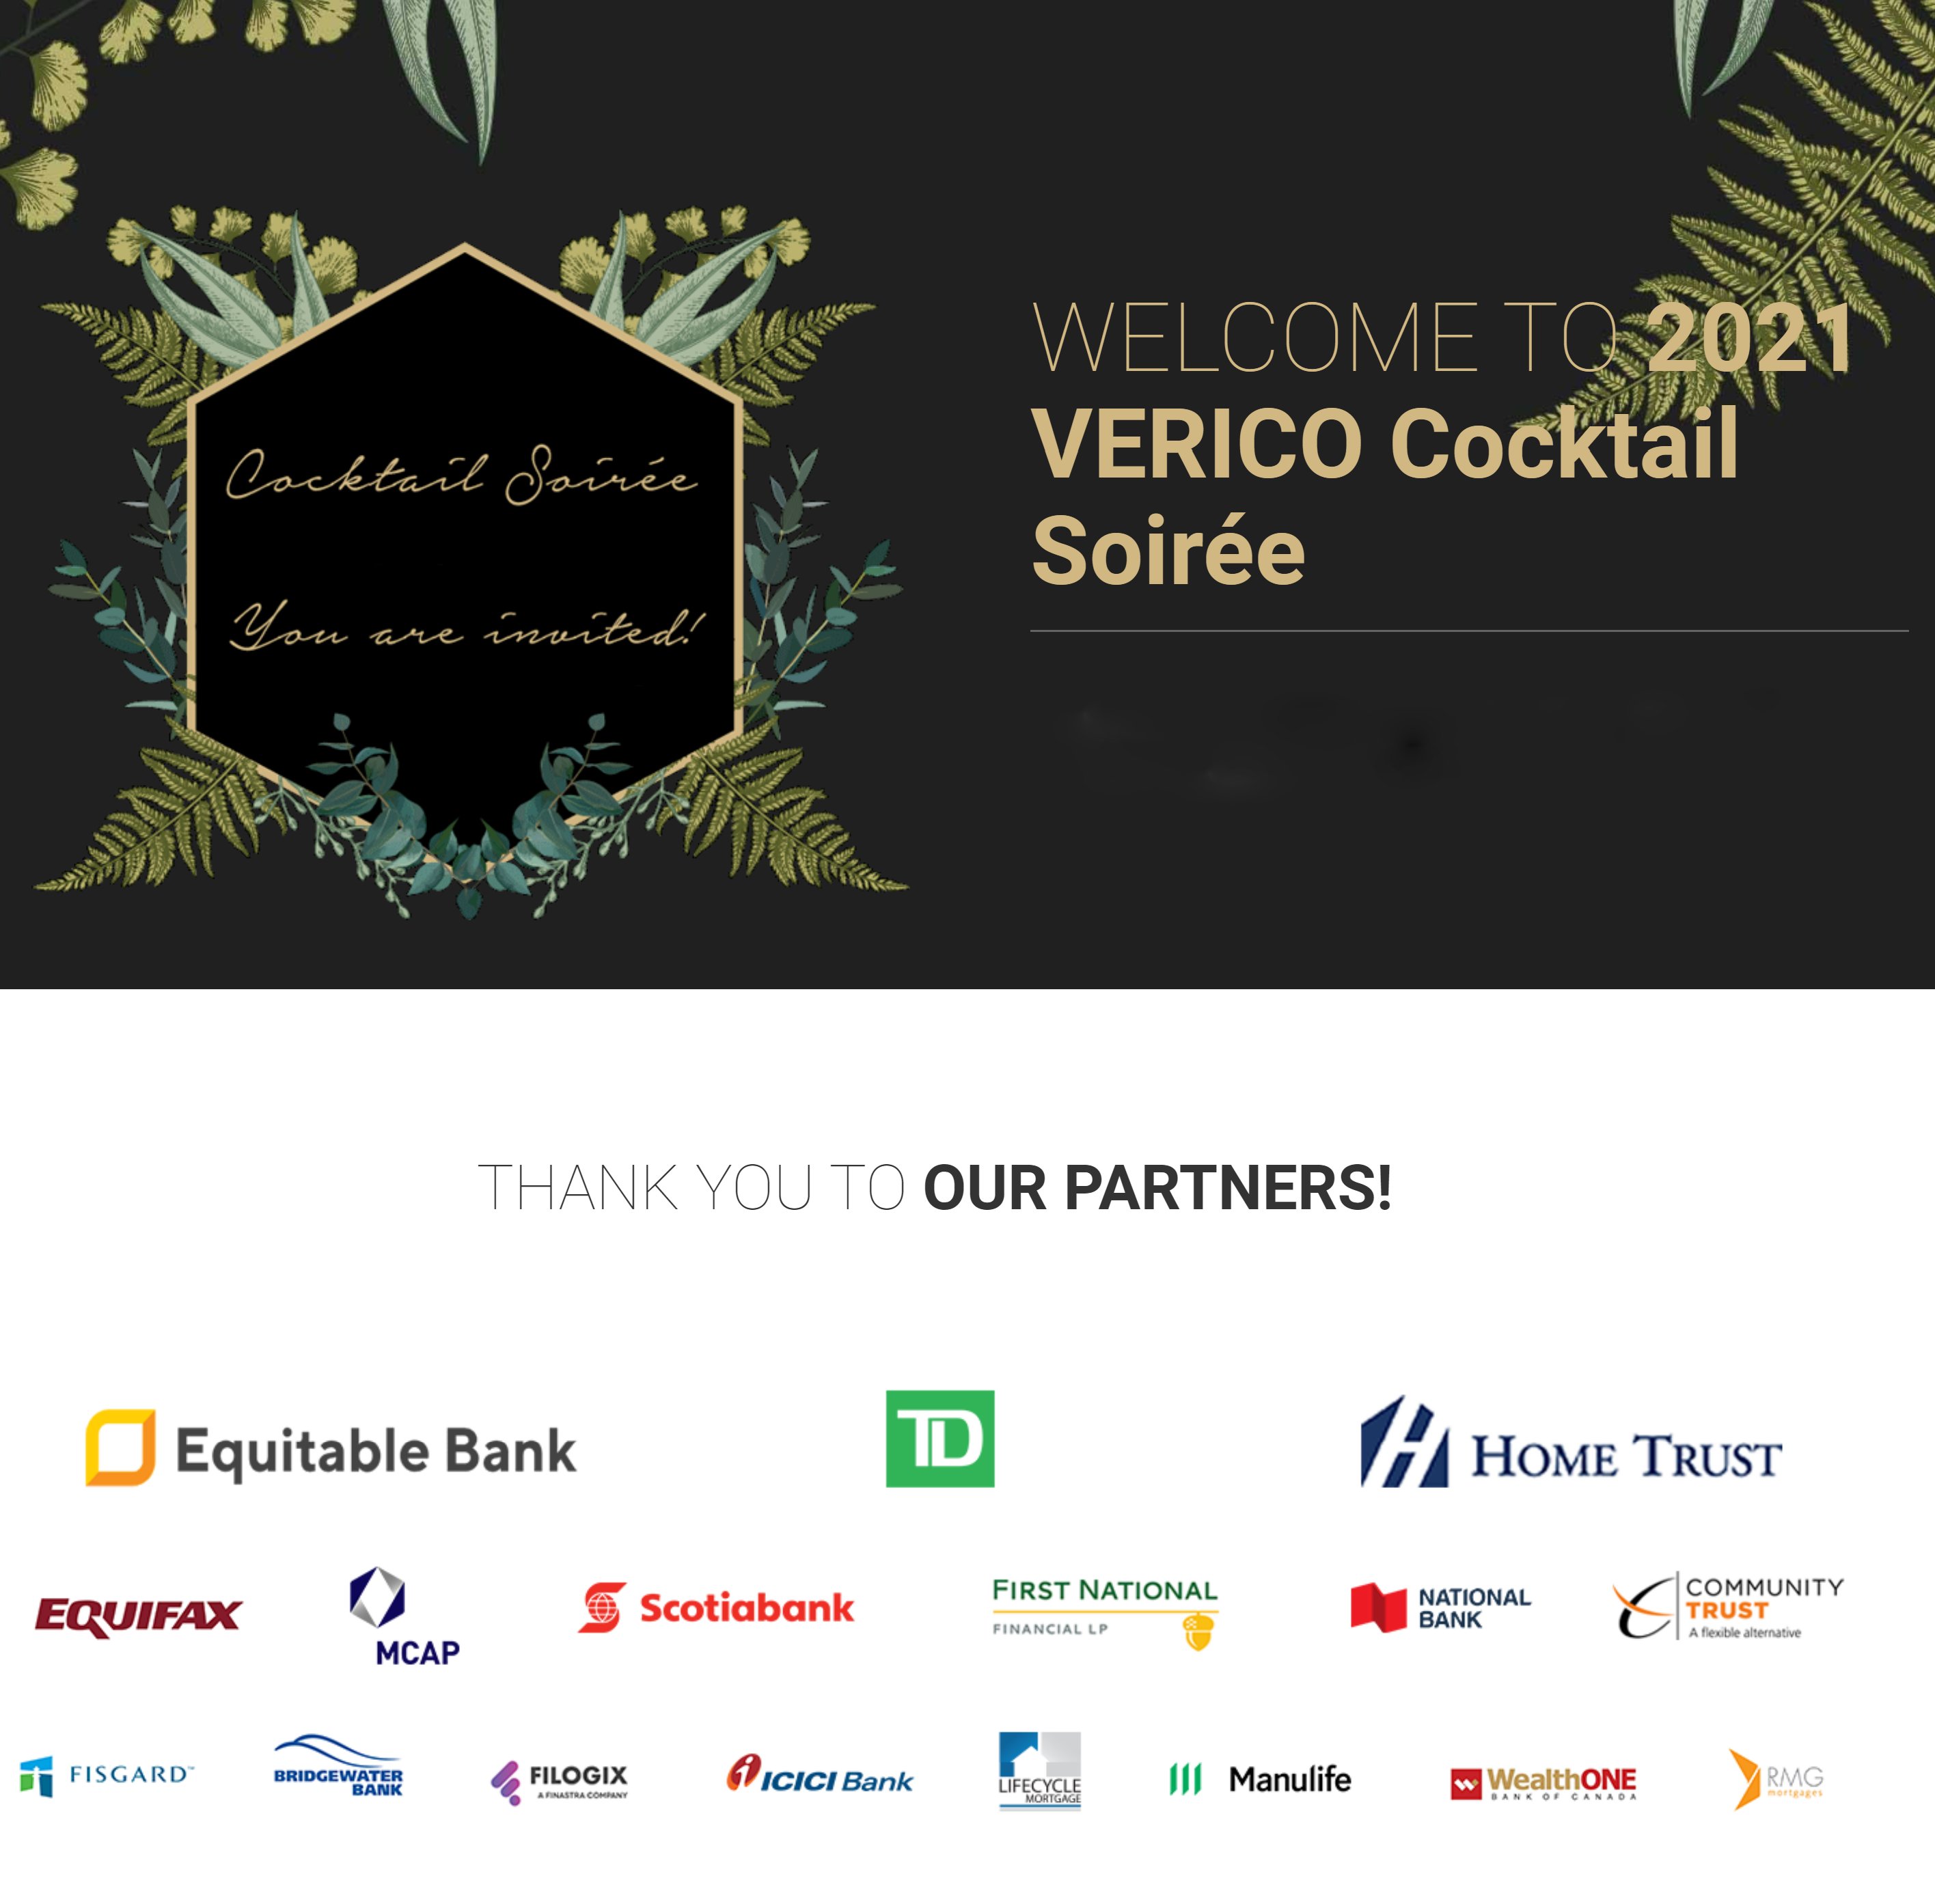 Verico Cocktail Soiree Invitation and sponsor names